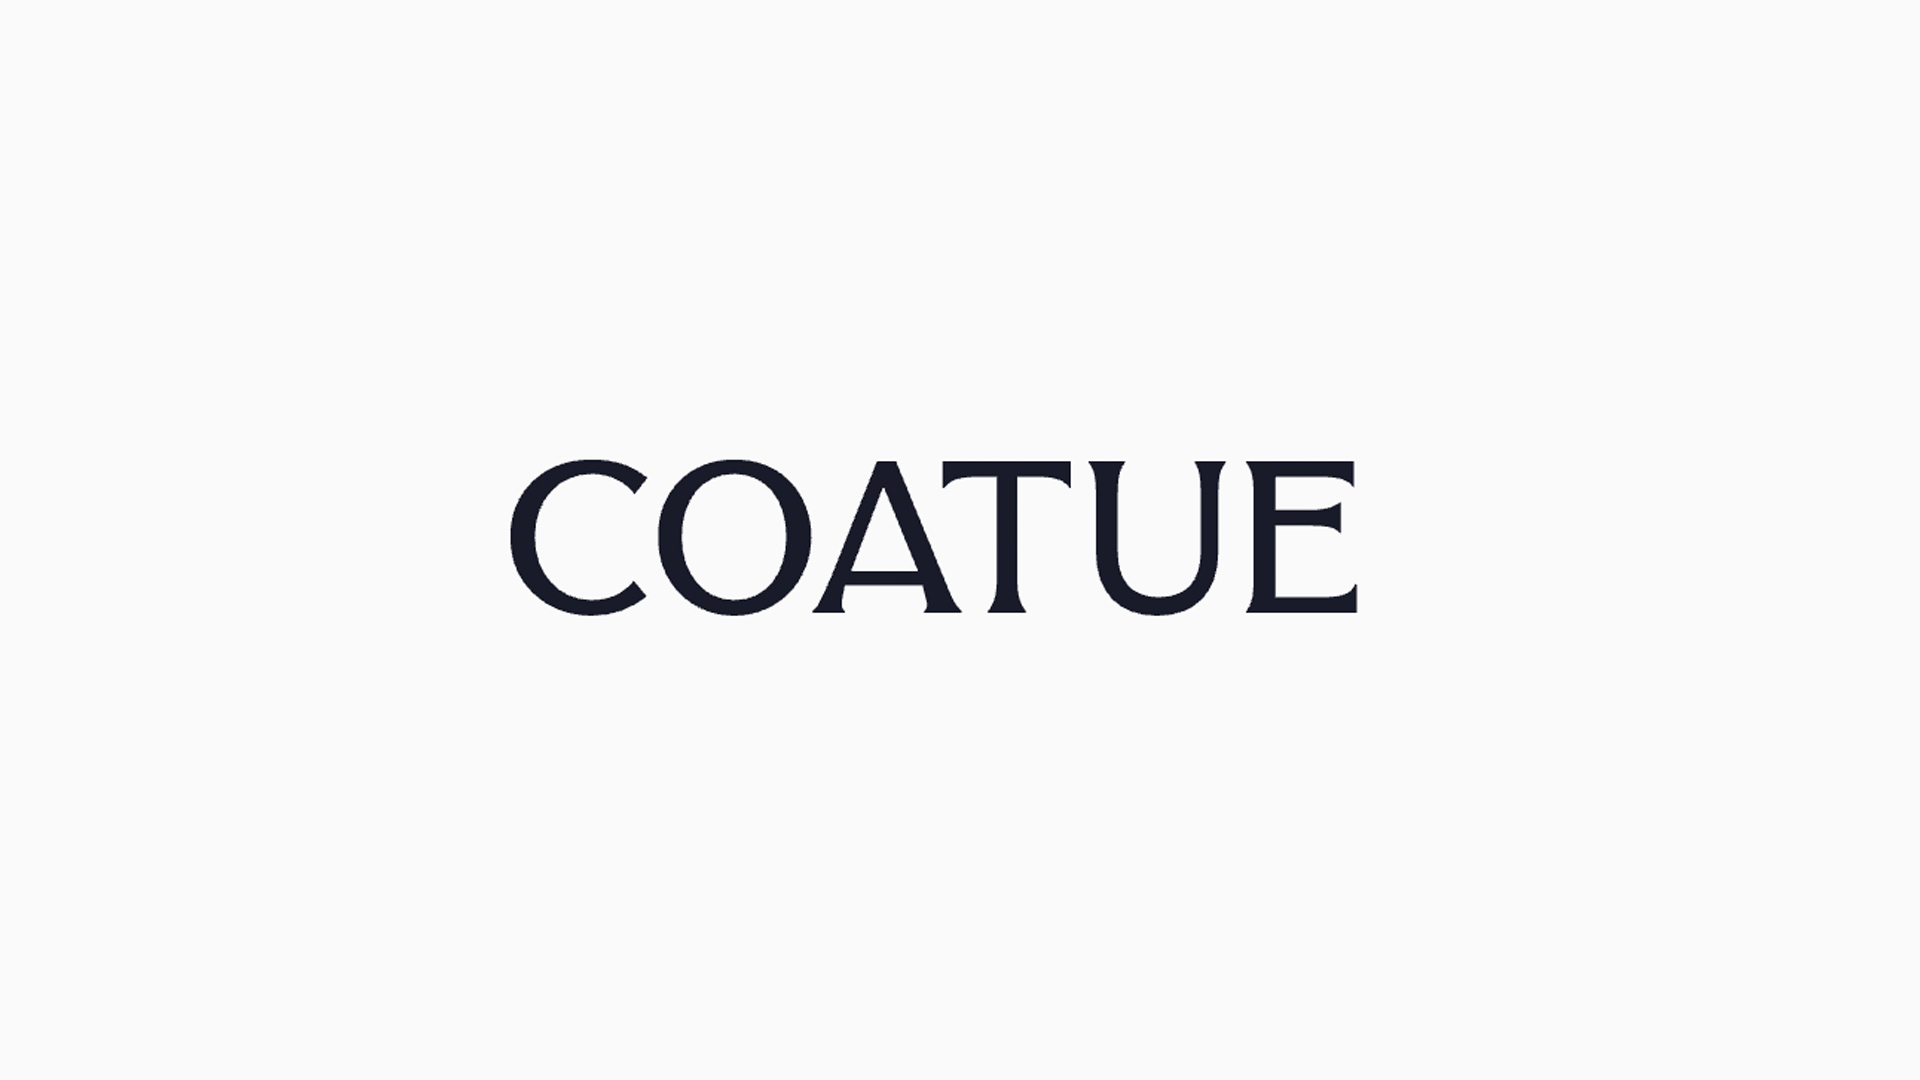 Coatueが14億ドルのファンドを調達し、ベンチャー企業が厳しい市場を乗り越える中で手数料を削減する